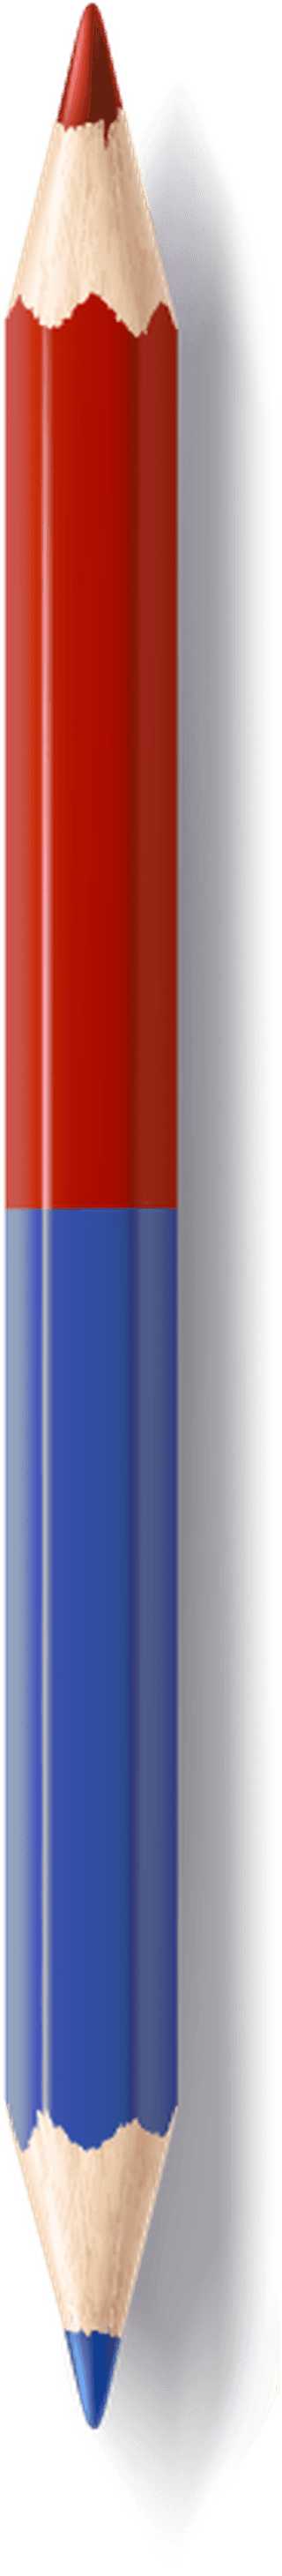 sharpenedpencils-various-lengths-with-rubber-sharpener-pencil-shavings-250941